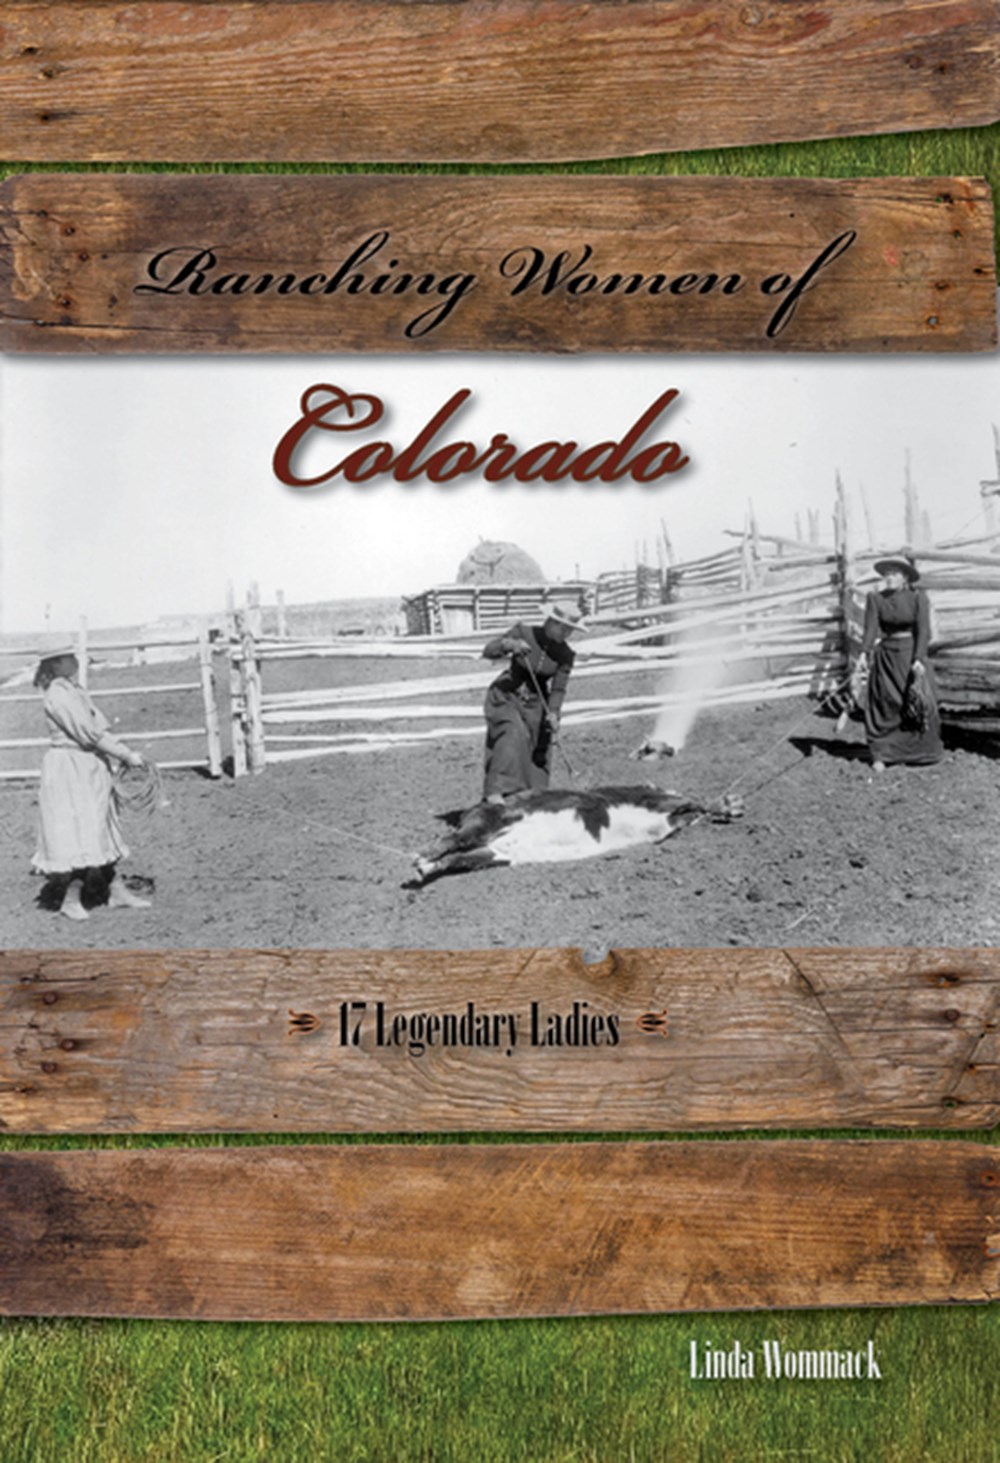 Ranching Women of Colorado: 17 Legendary Ladies